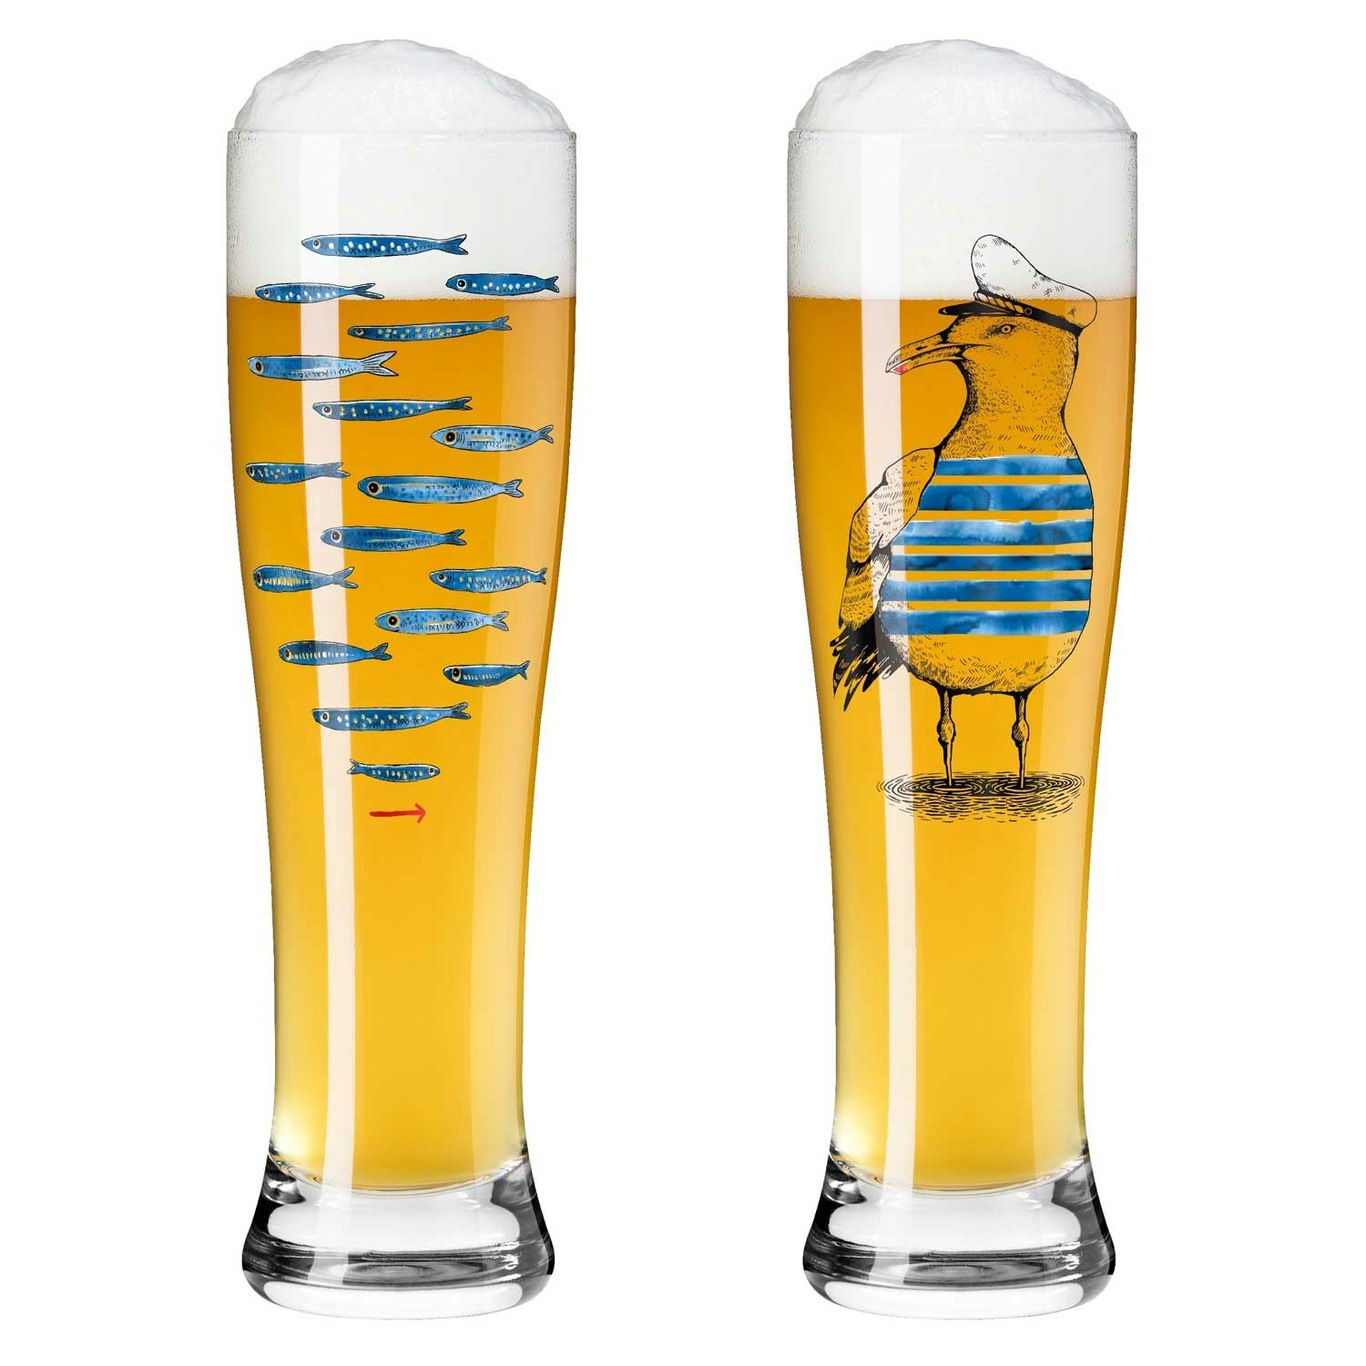 Brauchzeit Beer Glasses 2-pack, #13 & 14